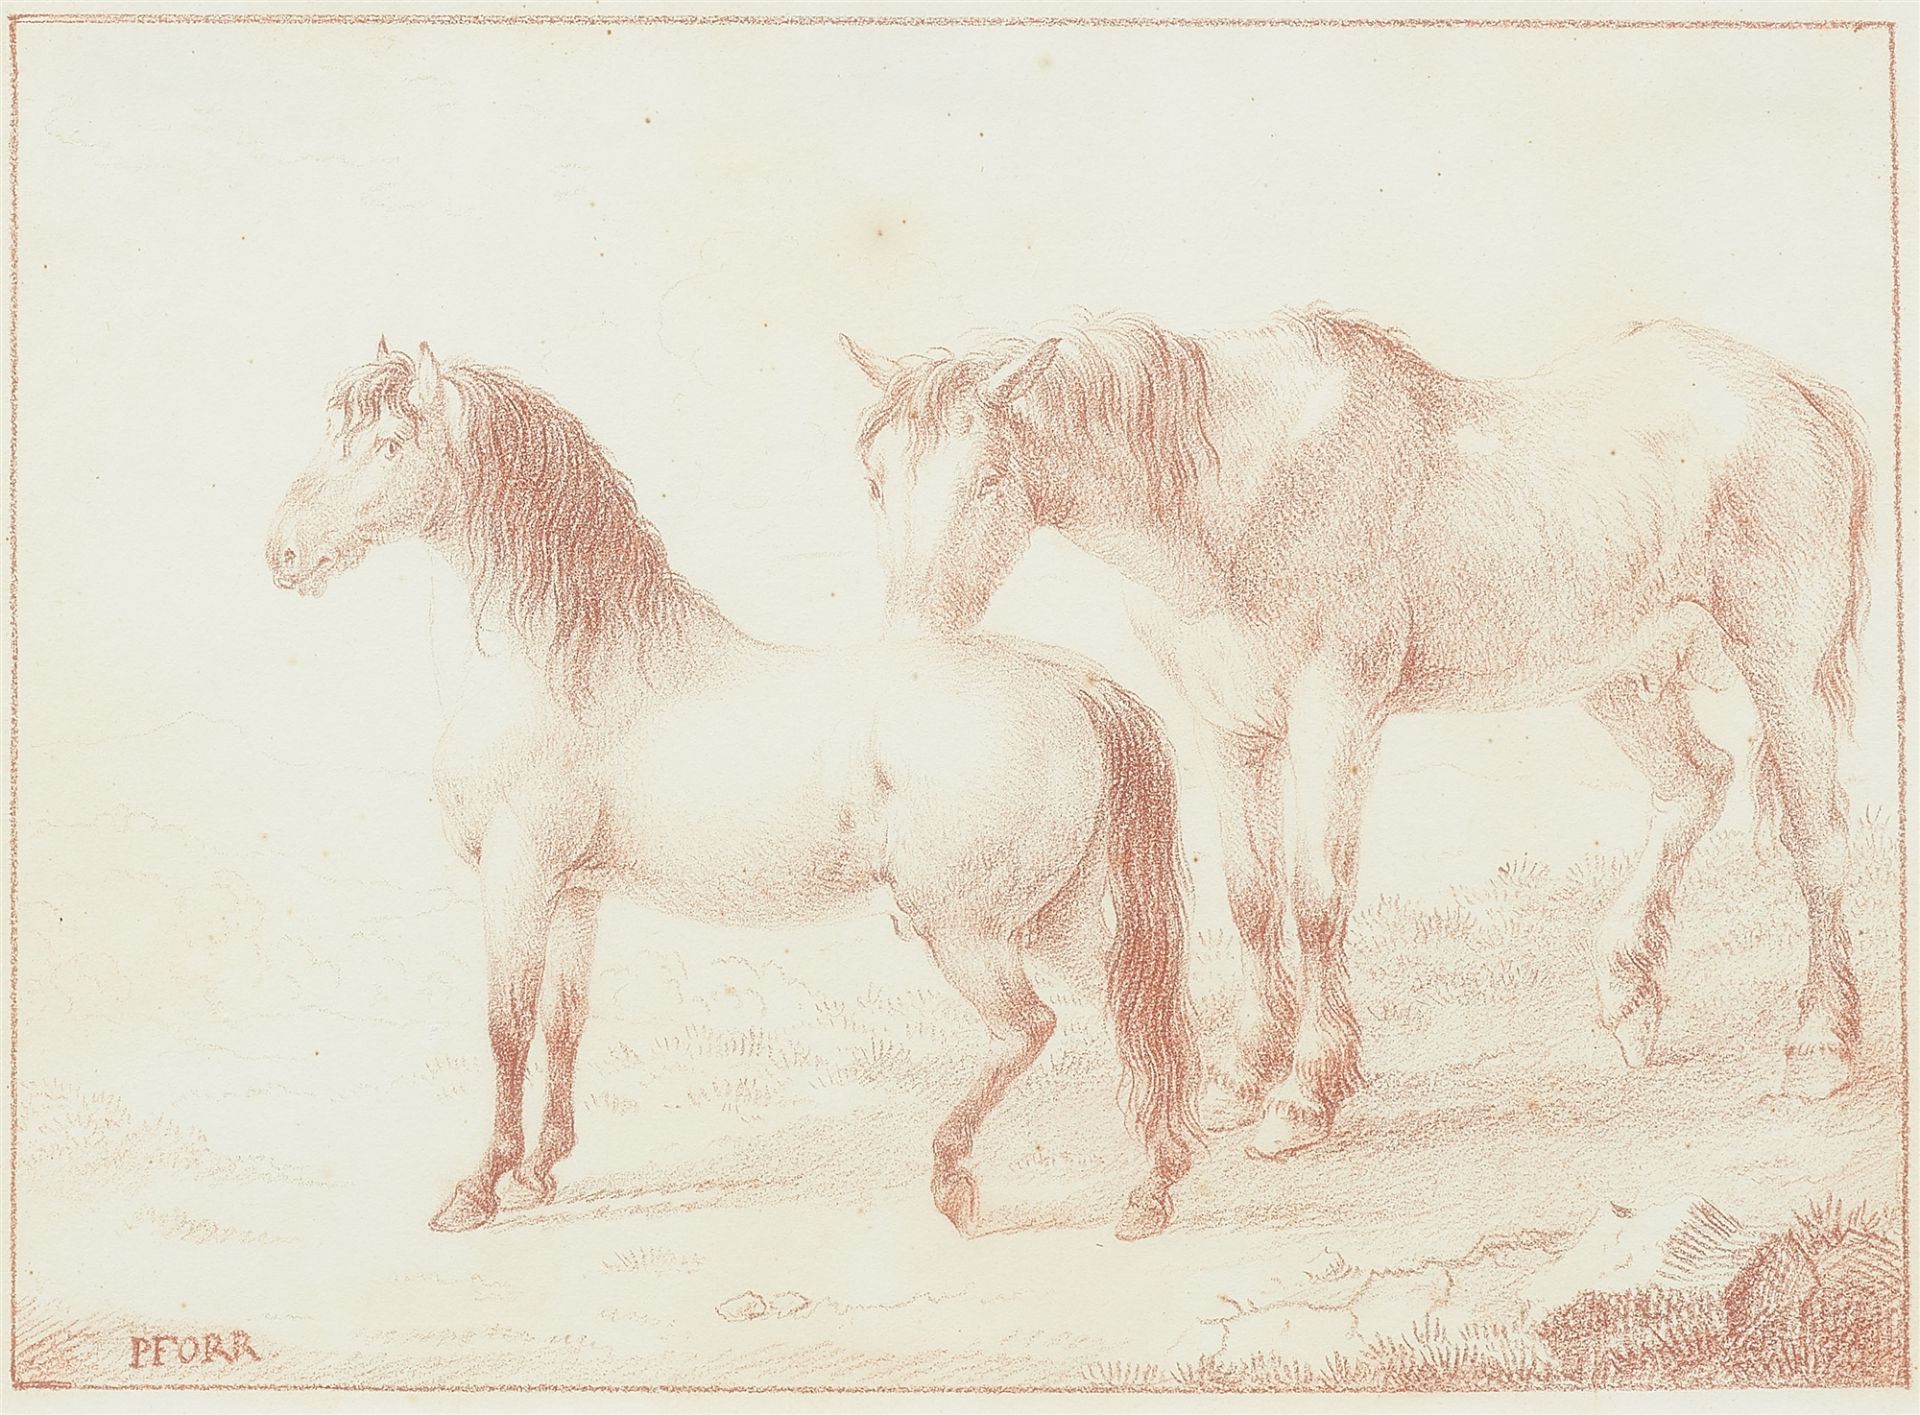 Franz Pforr, Horse studies